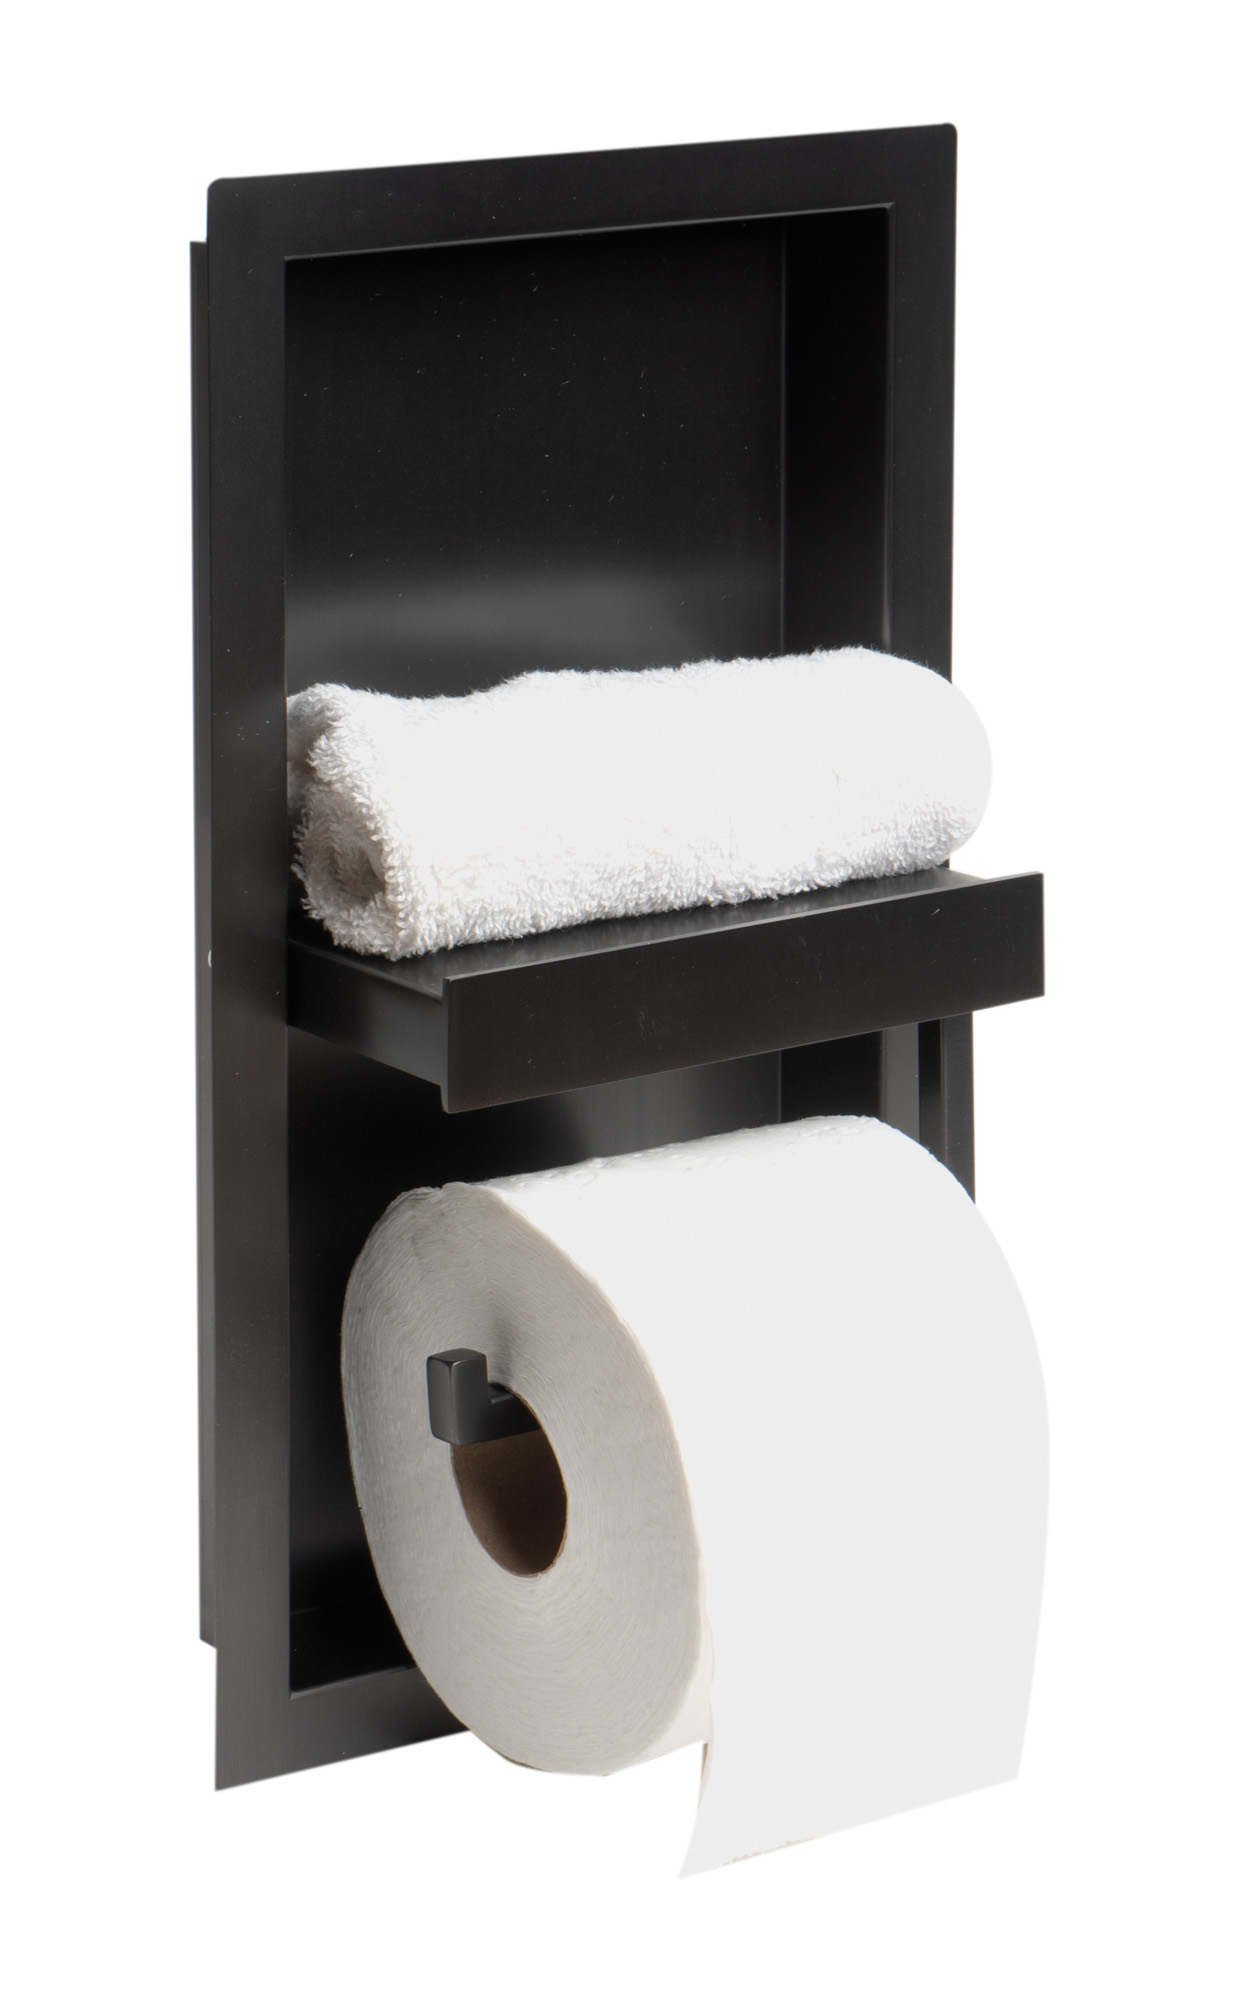 ALFI brand ABTPNP88-BB Brushed Black PVD Stainless Steel Recessed Shelf / Toilet Paper Holder Niche